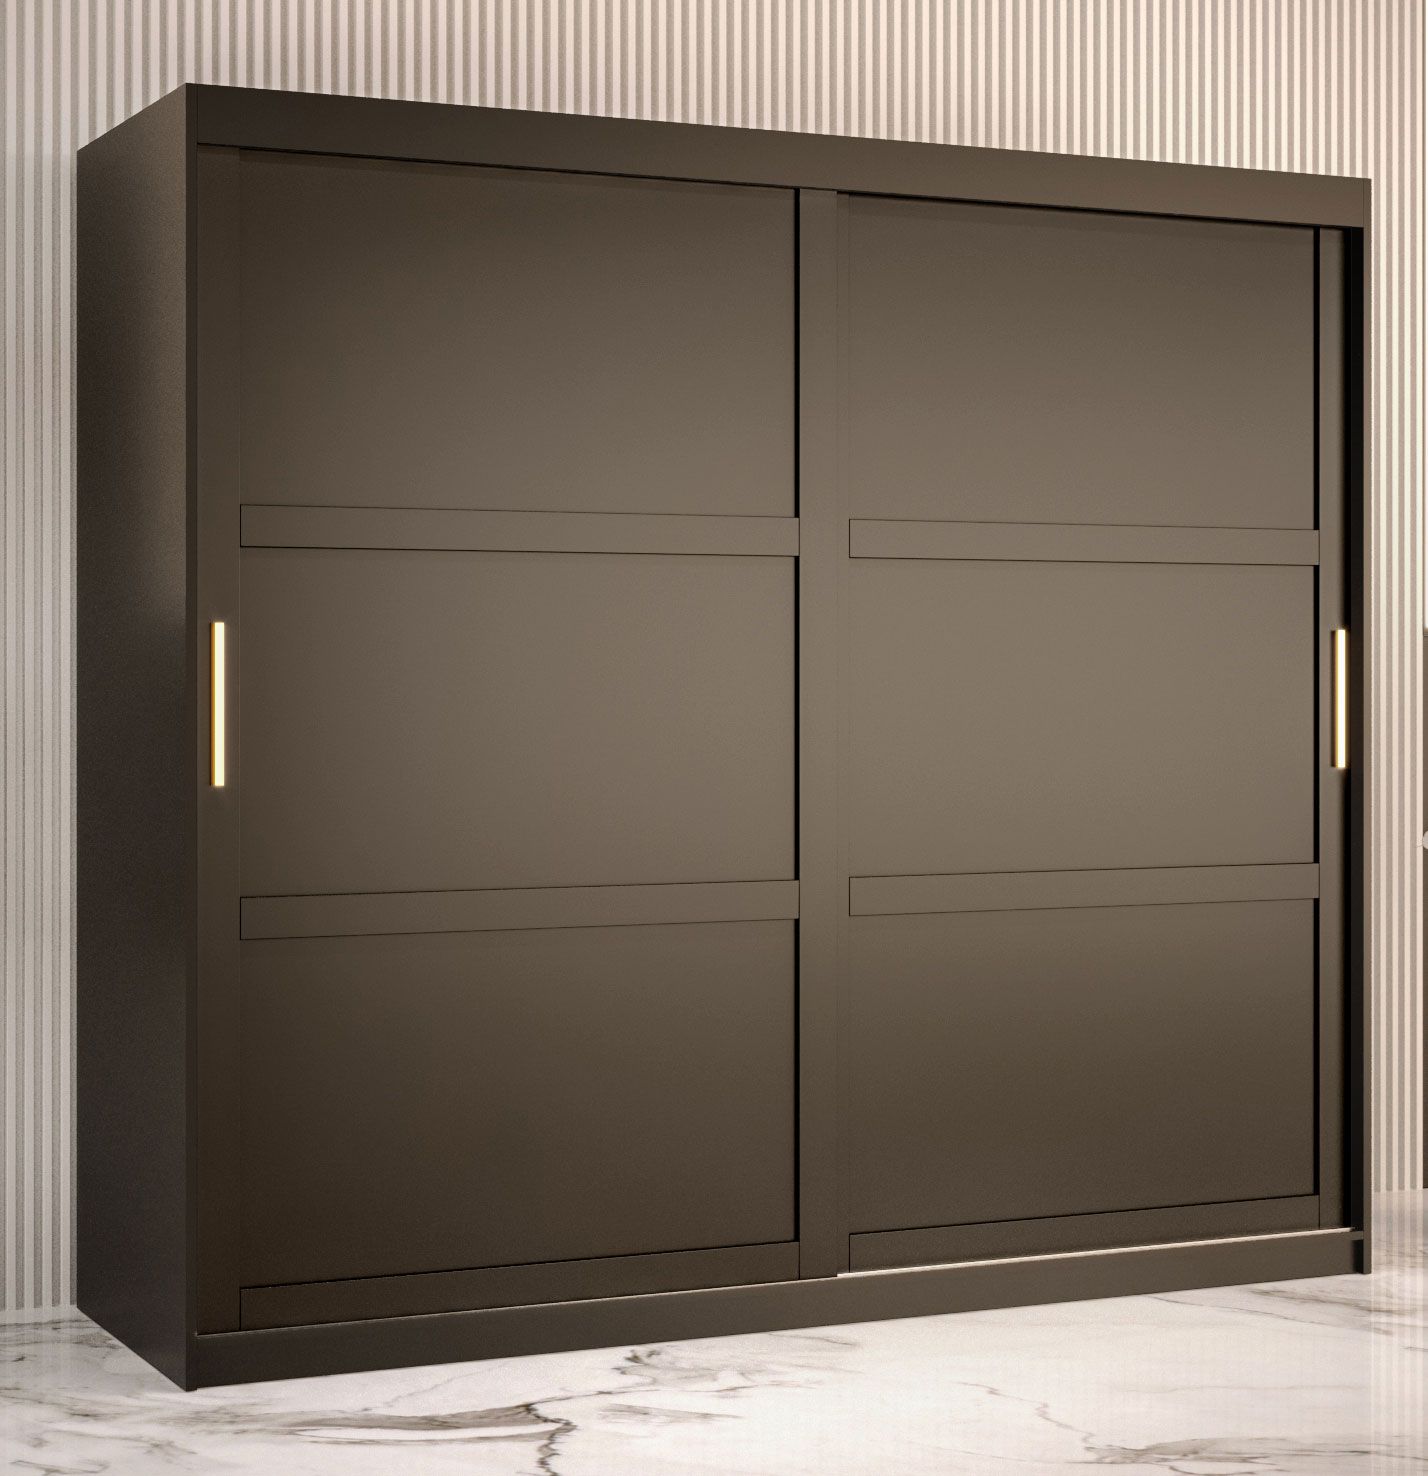 elegante kledingkast met voldoende opbergruimte Liskamm 20, kleur: mat zwart - afmetingen: 200 x 200 x 62 cm (H x B x D), met 10 vakken en twee kledingroedes